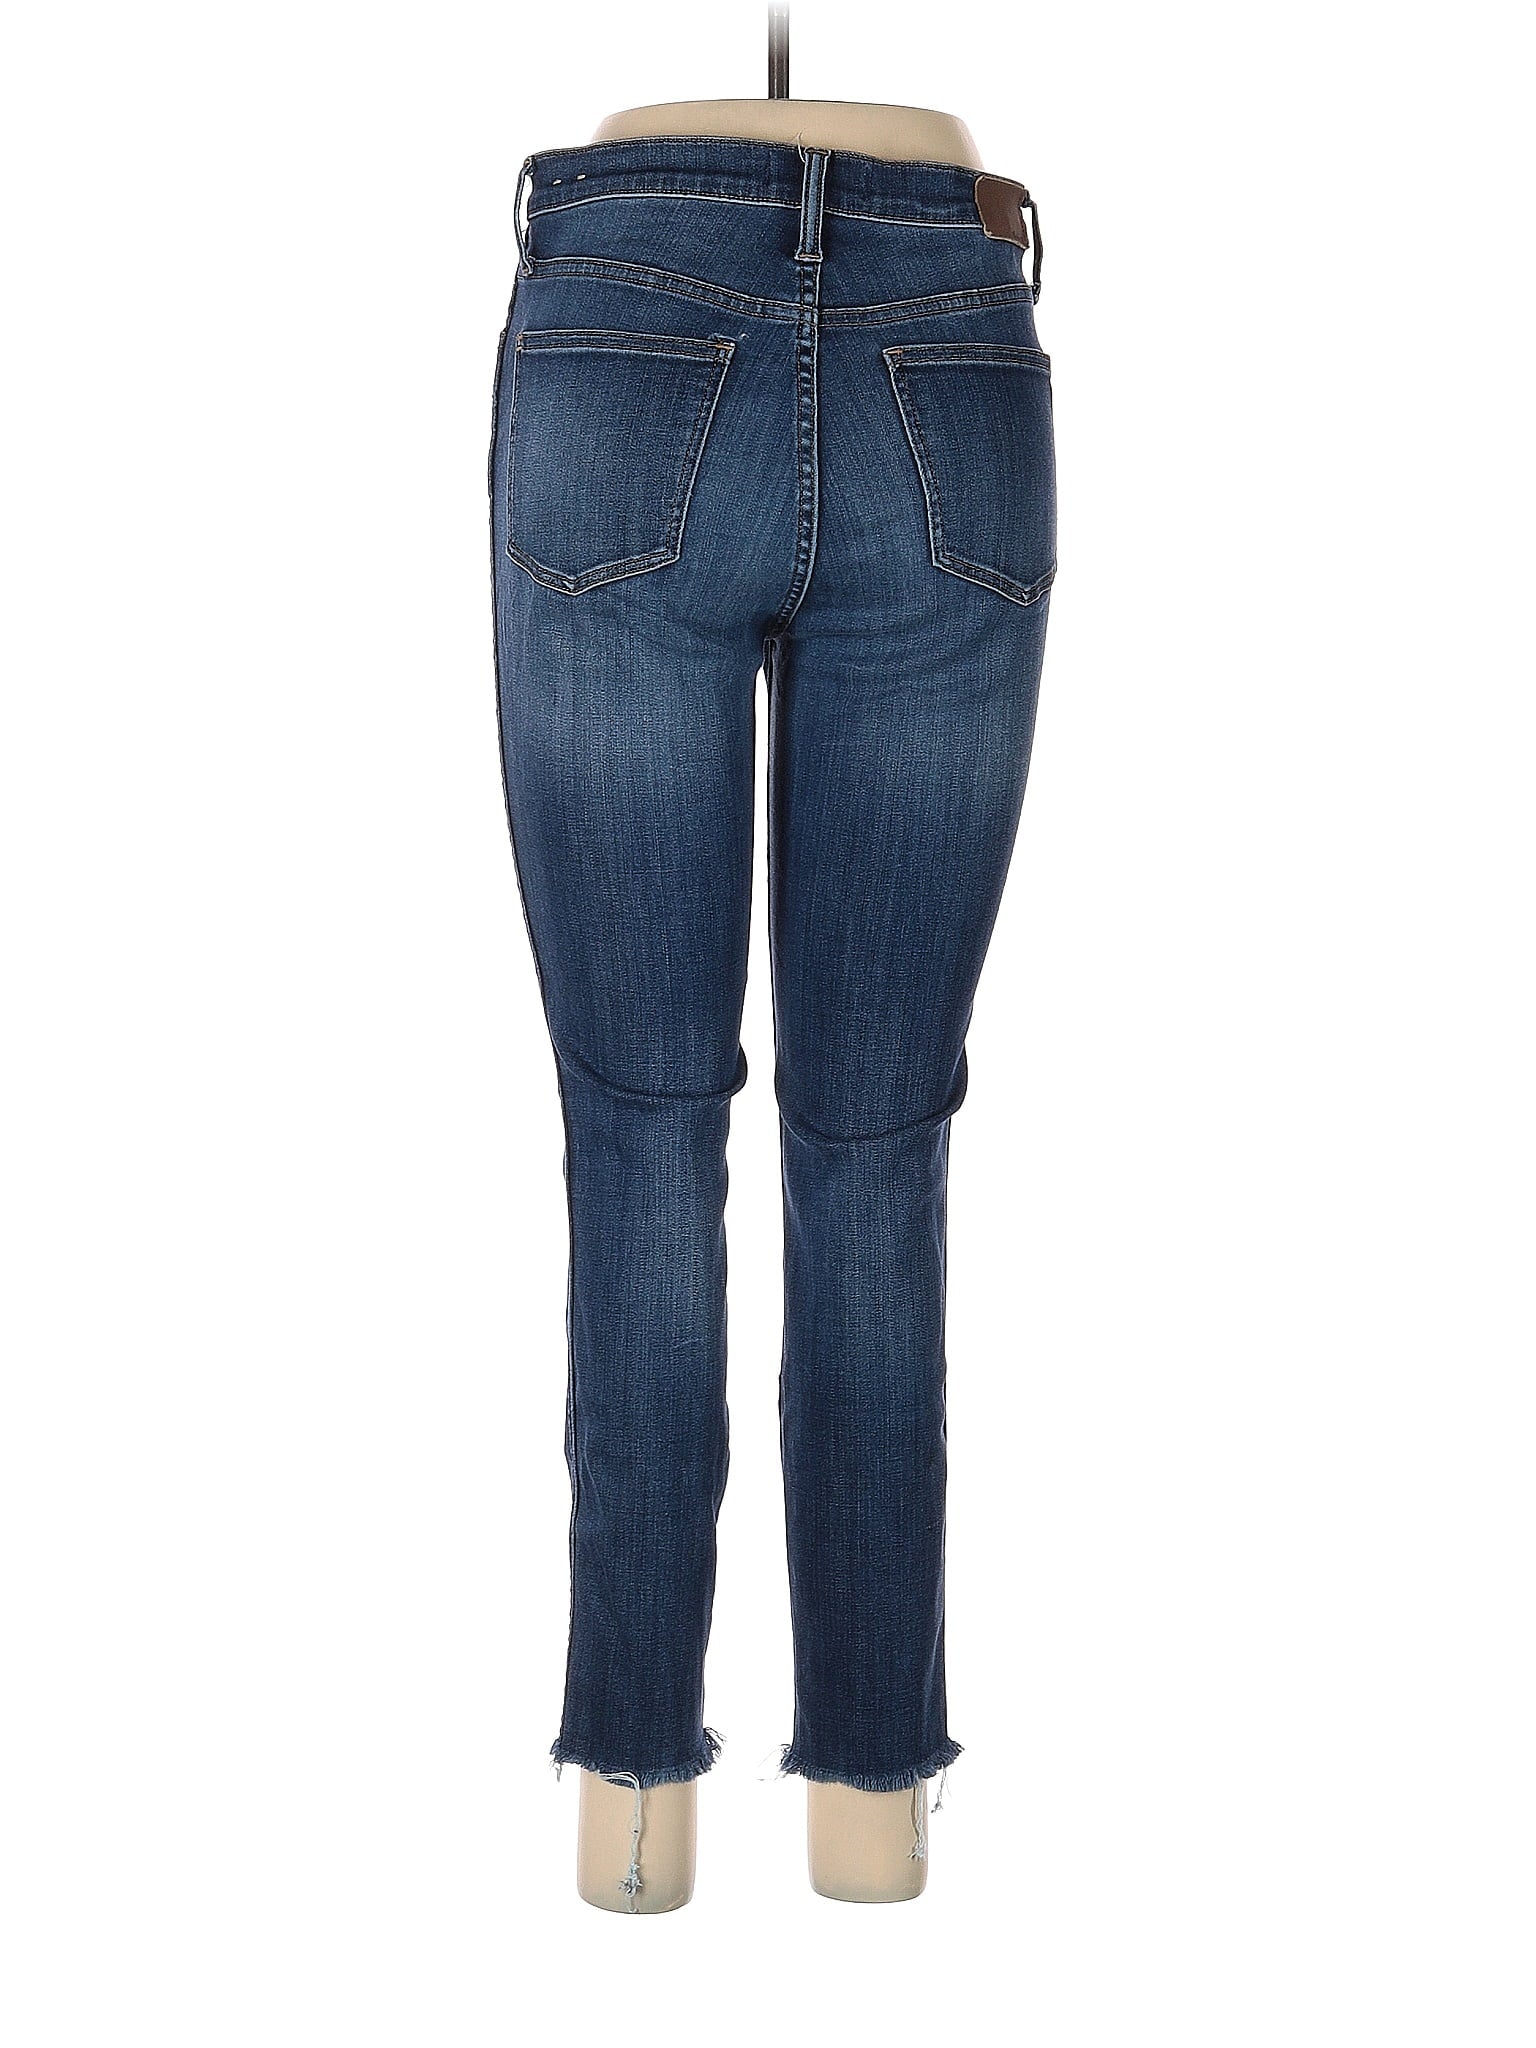 High-Rise Jeans waist size - 29